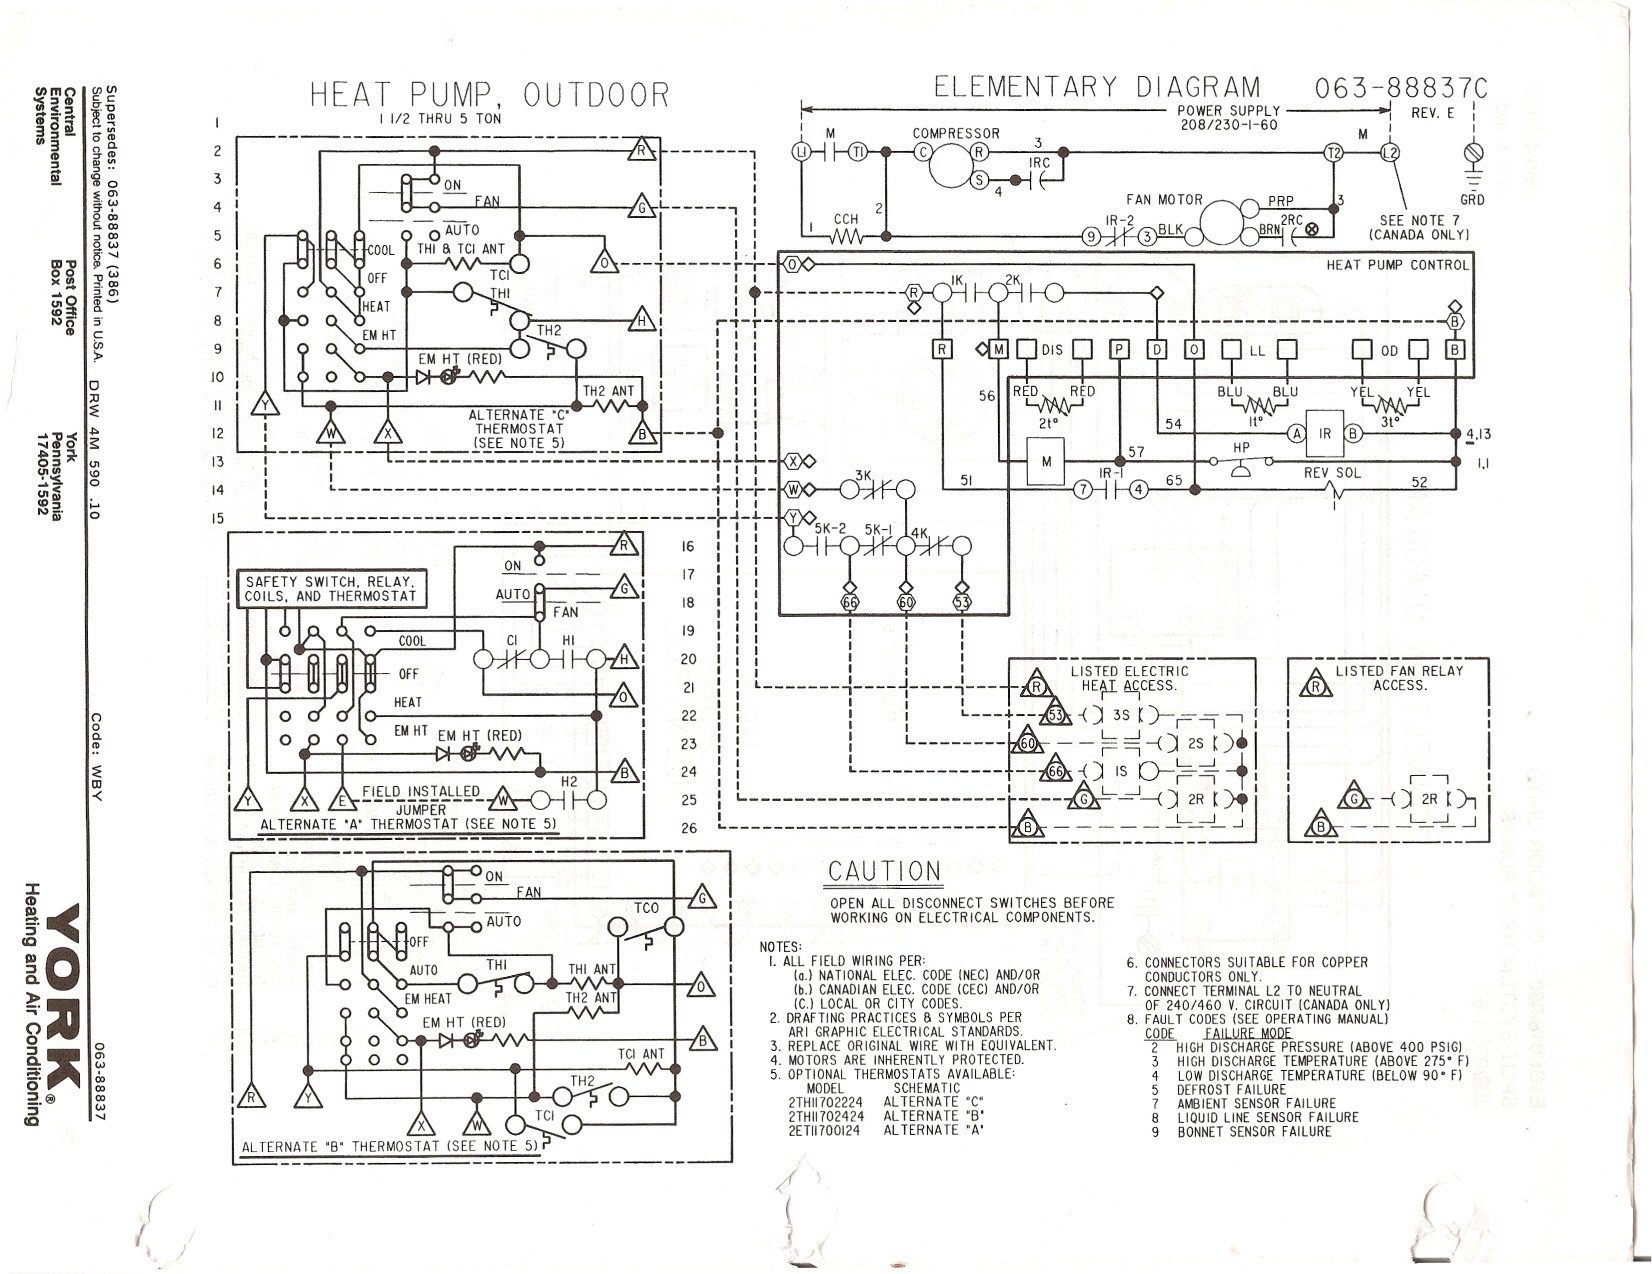 Wiring Diagram for York Air Conditioner Best Mcquay Air Conditioner Wiring Diagram Valid Mcquay Wiring Diagram